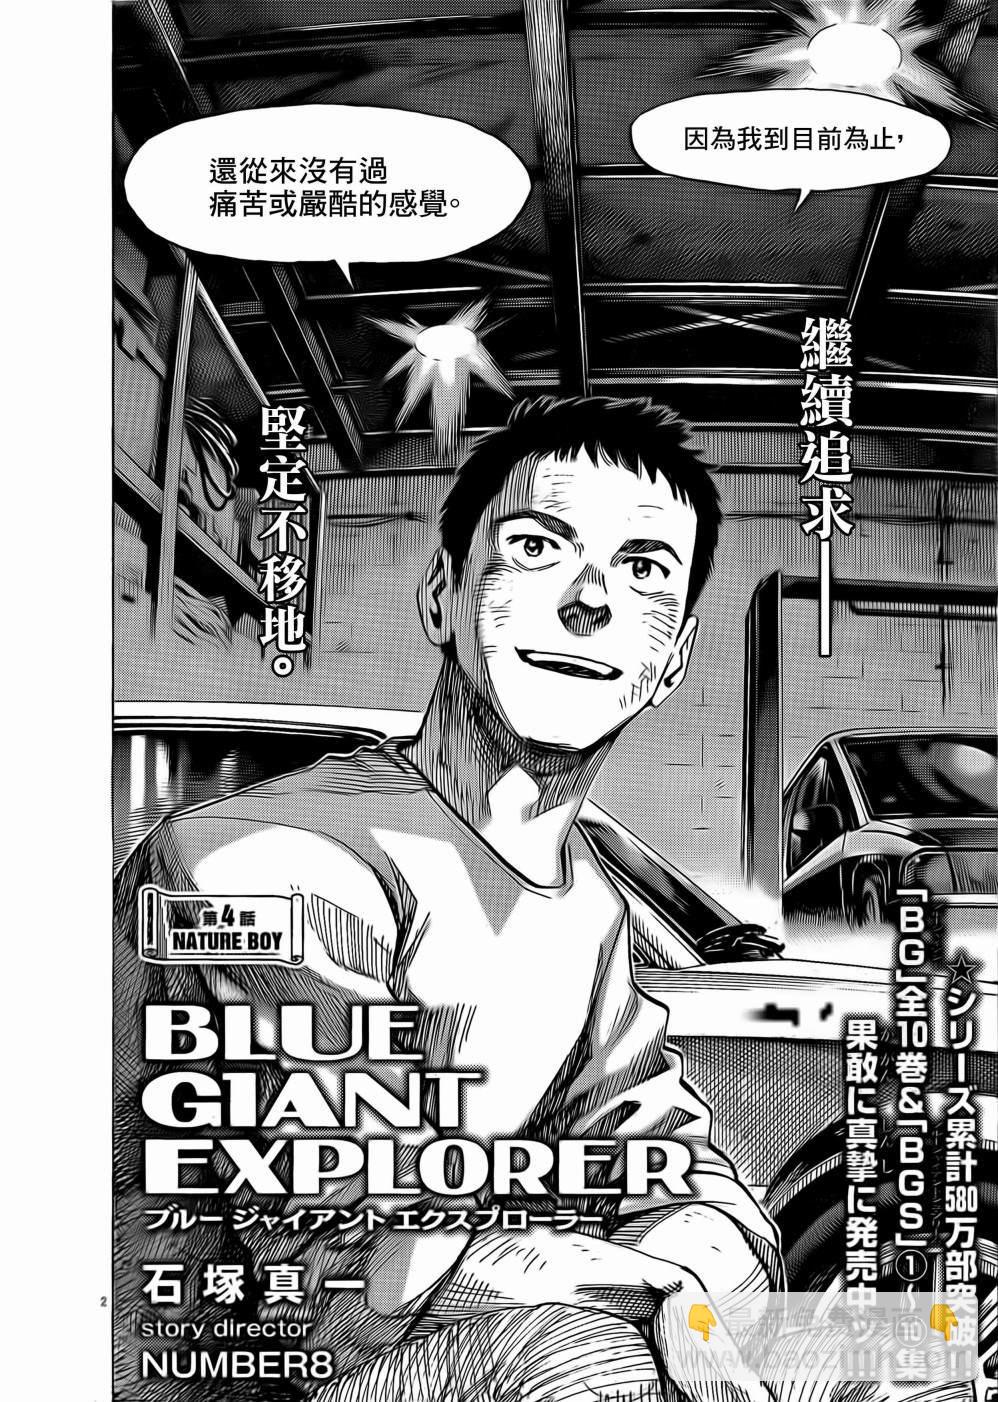 BLUE GIANT EXPLORER - 第4話 - 2